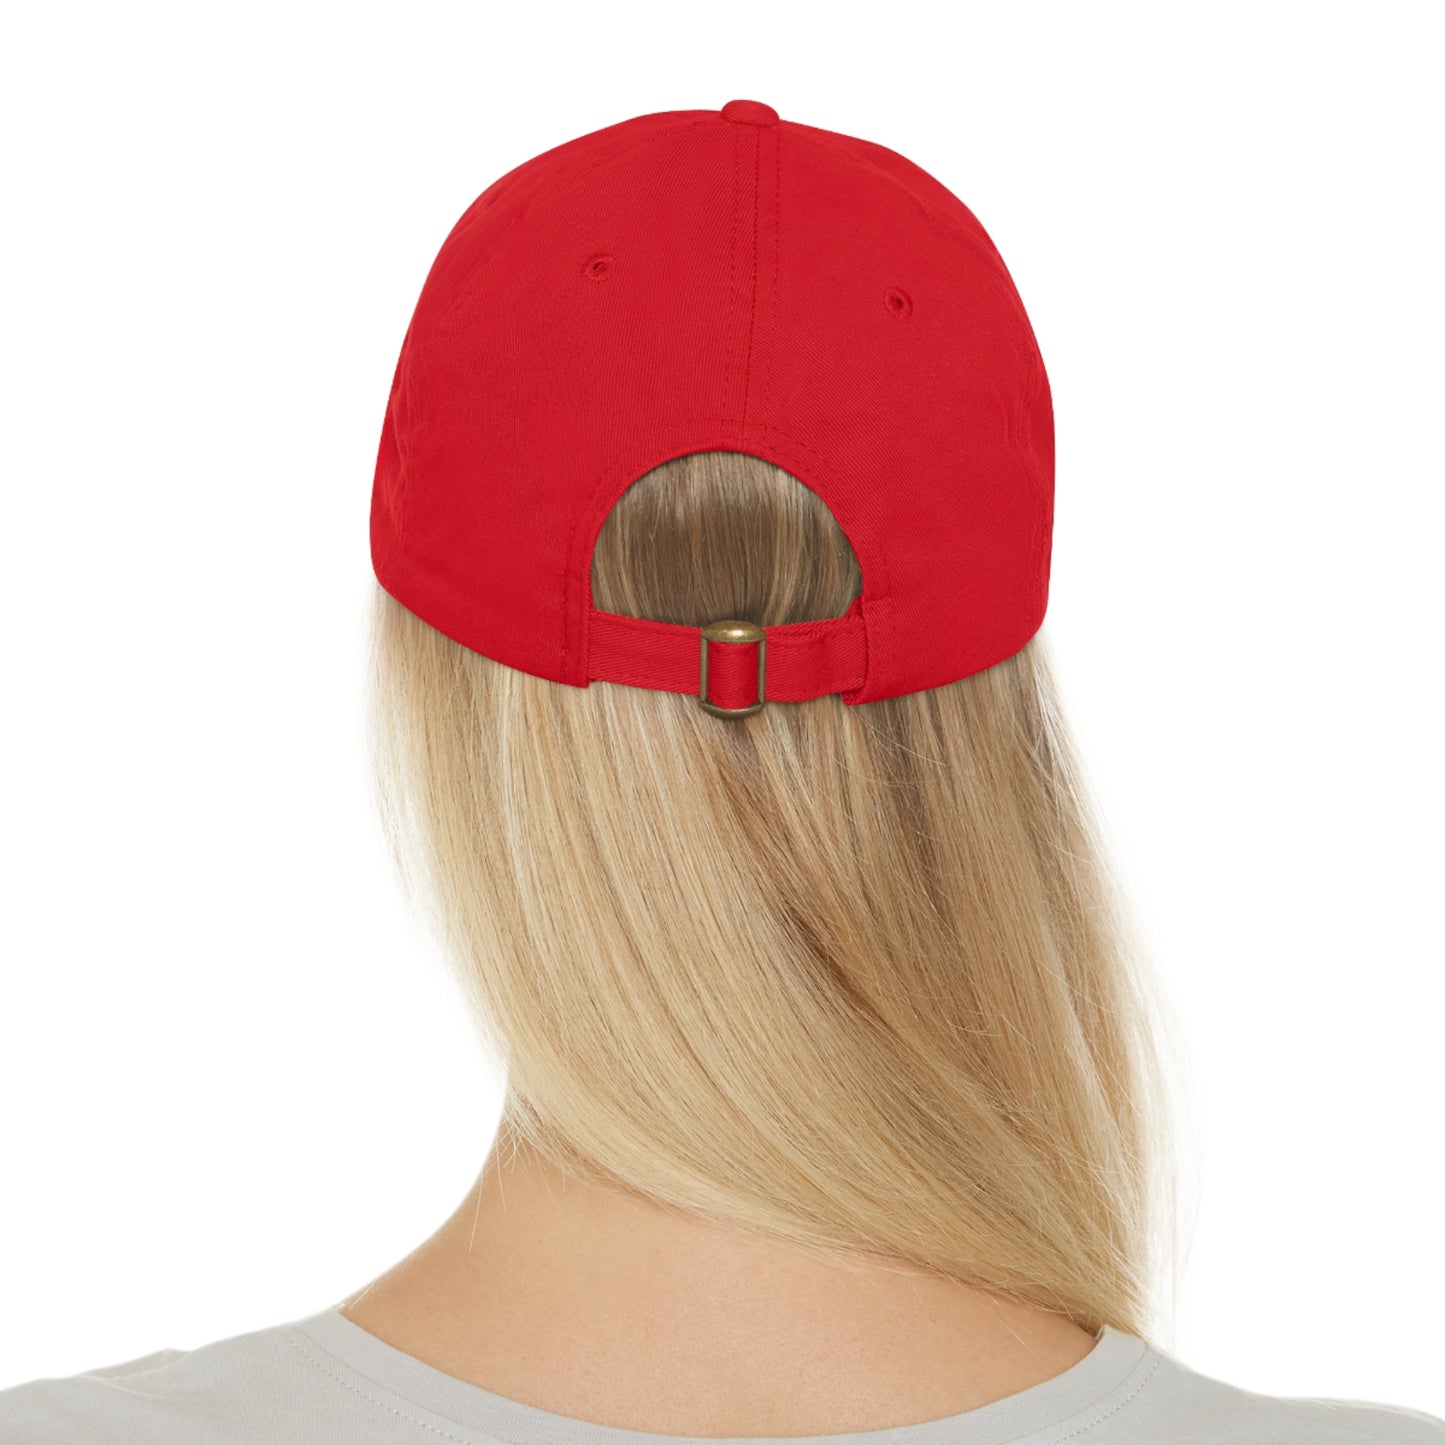 Cincinnati Reds Baseball Hat